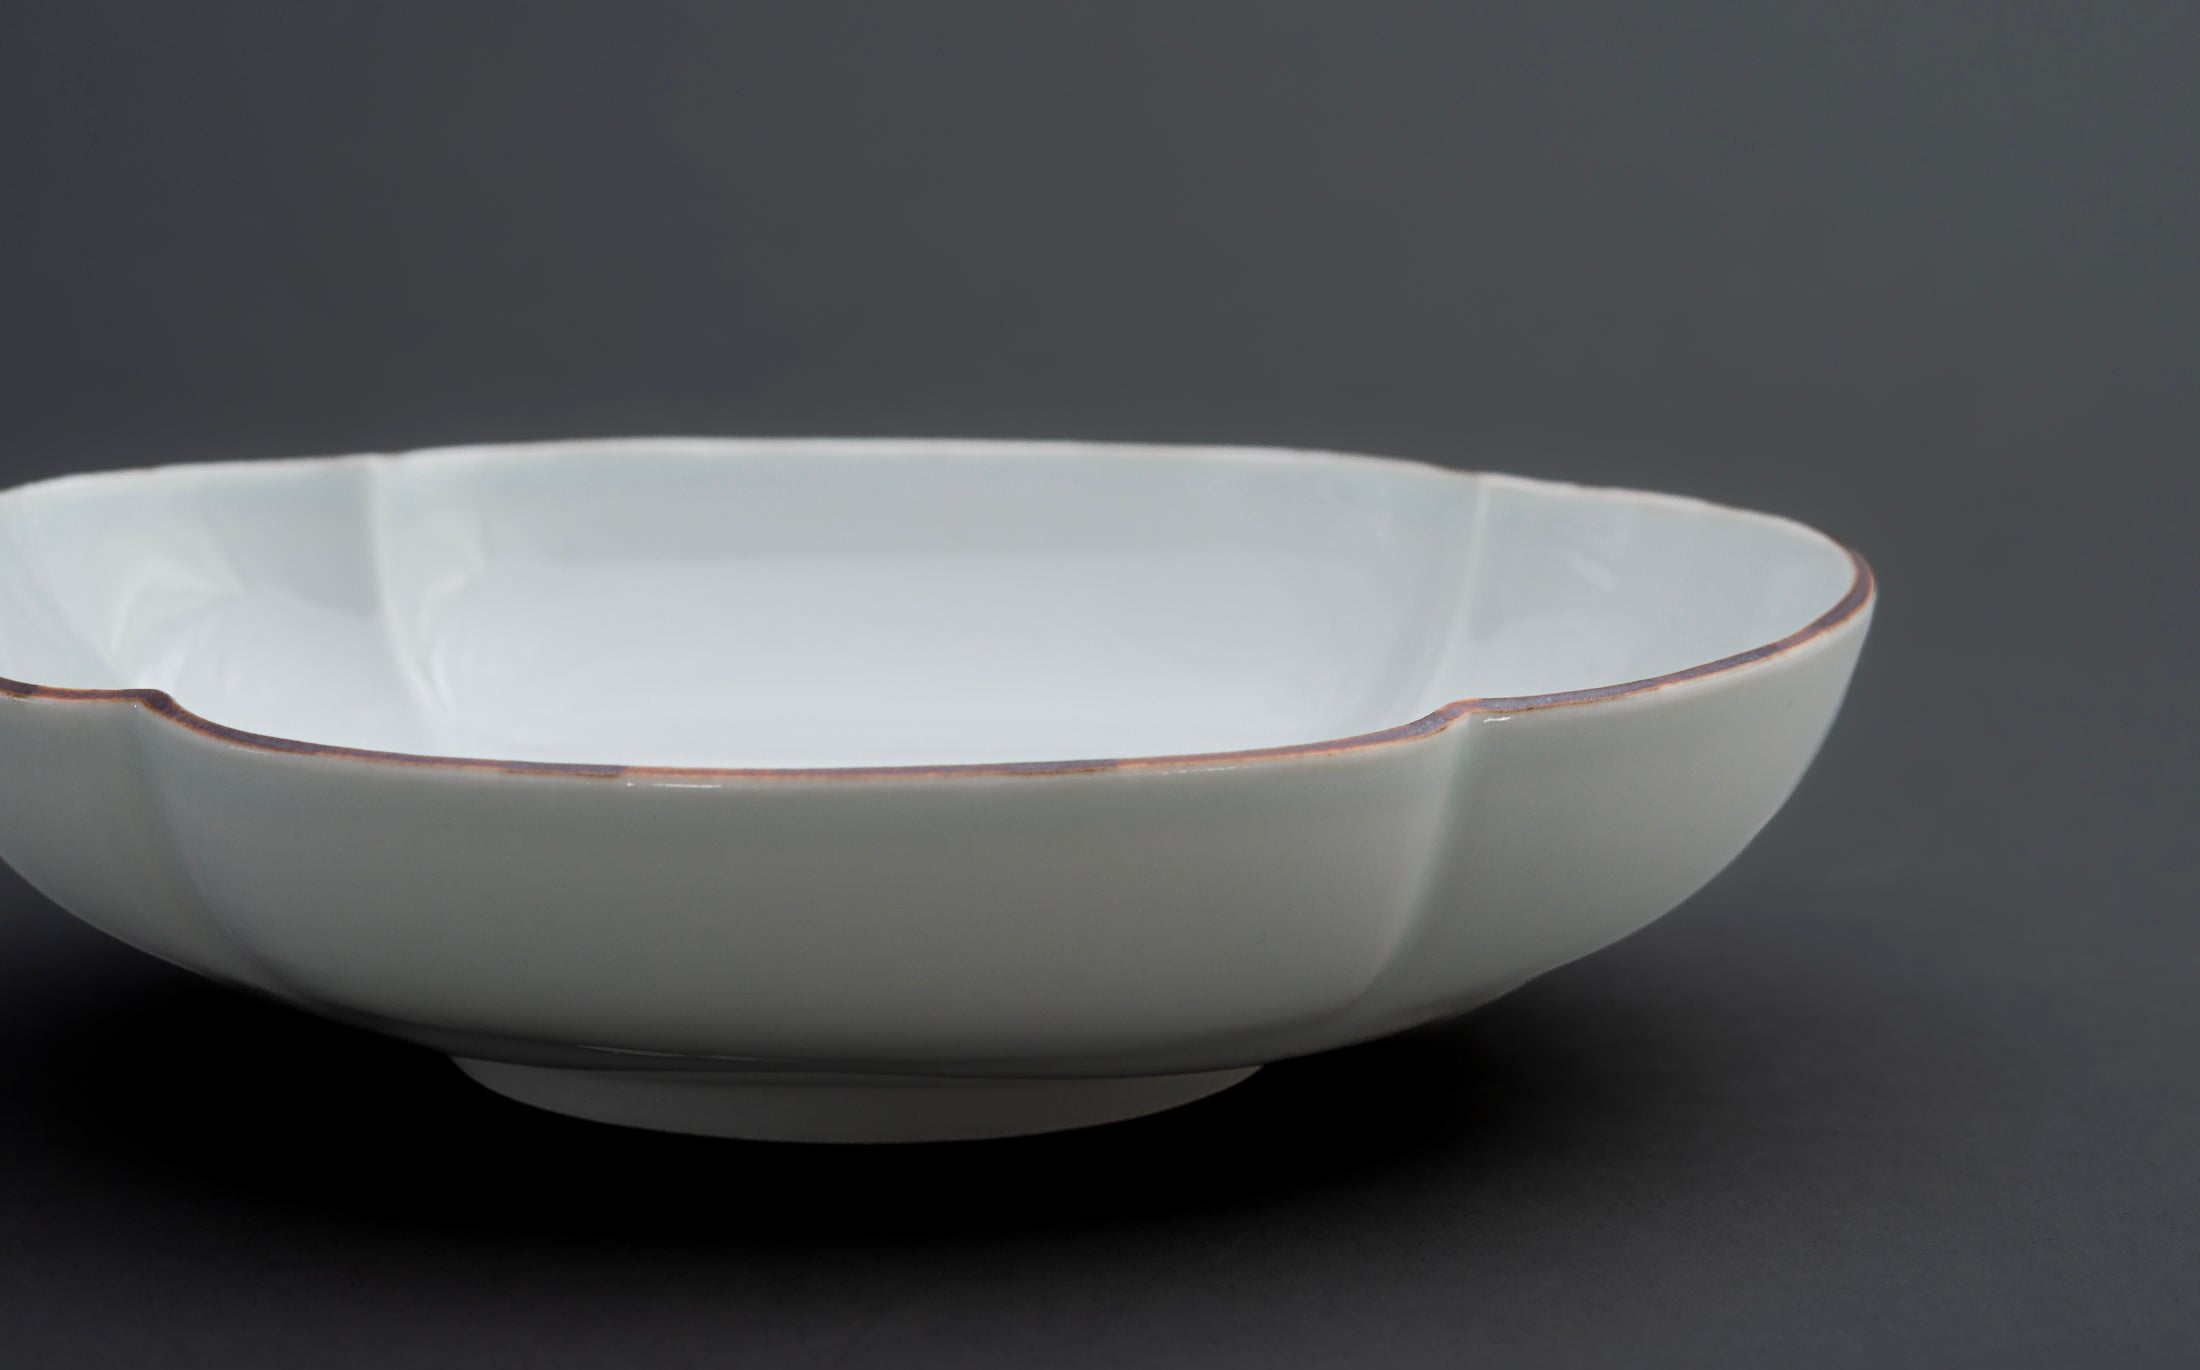 Katsutoshi Mizuno - Porcelain White - Plate 006